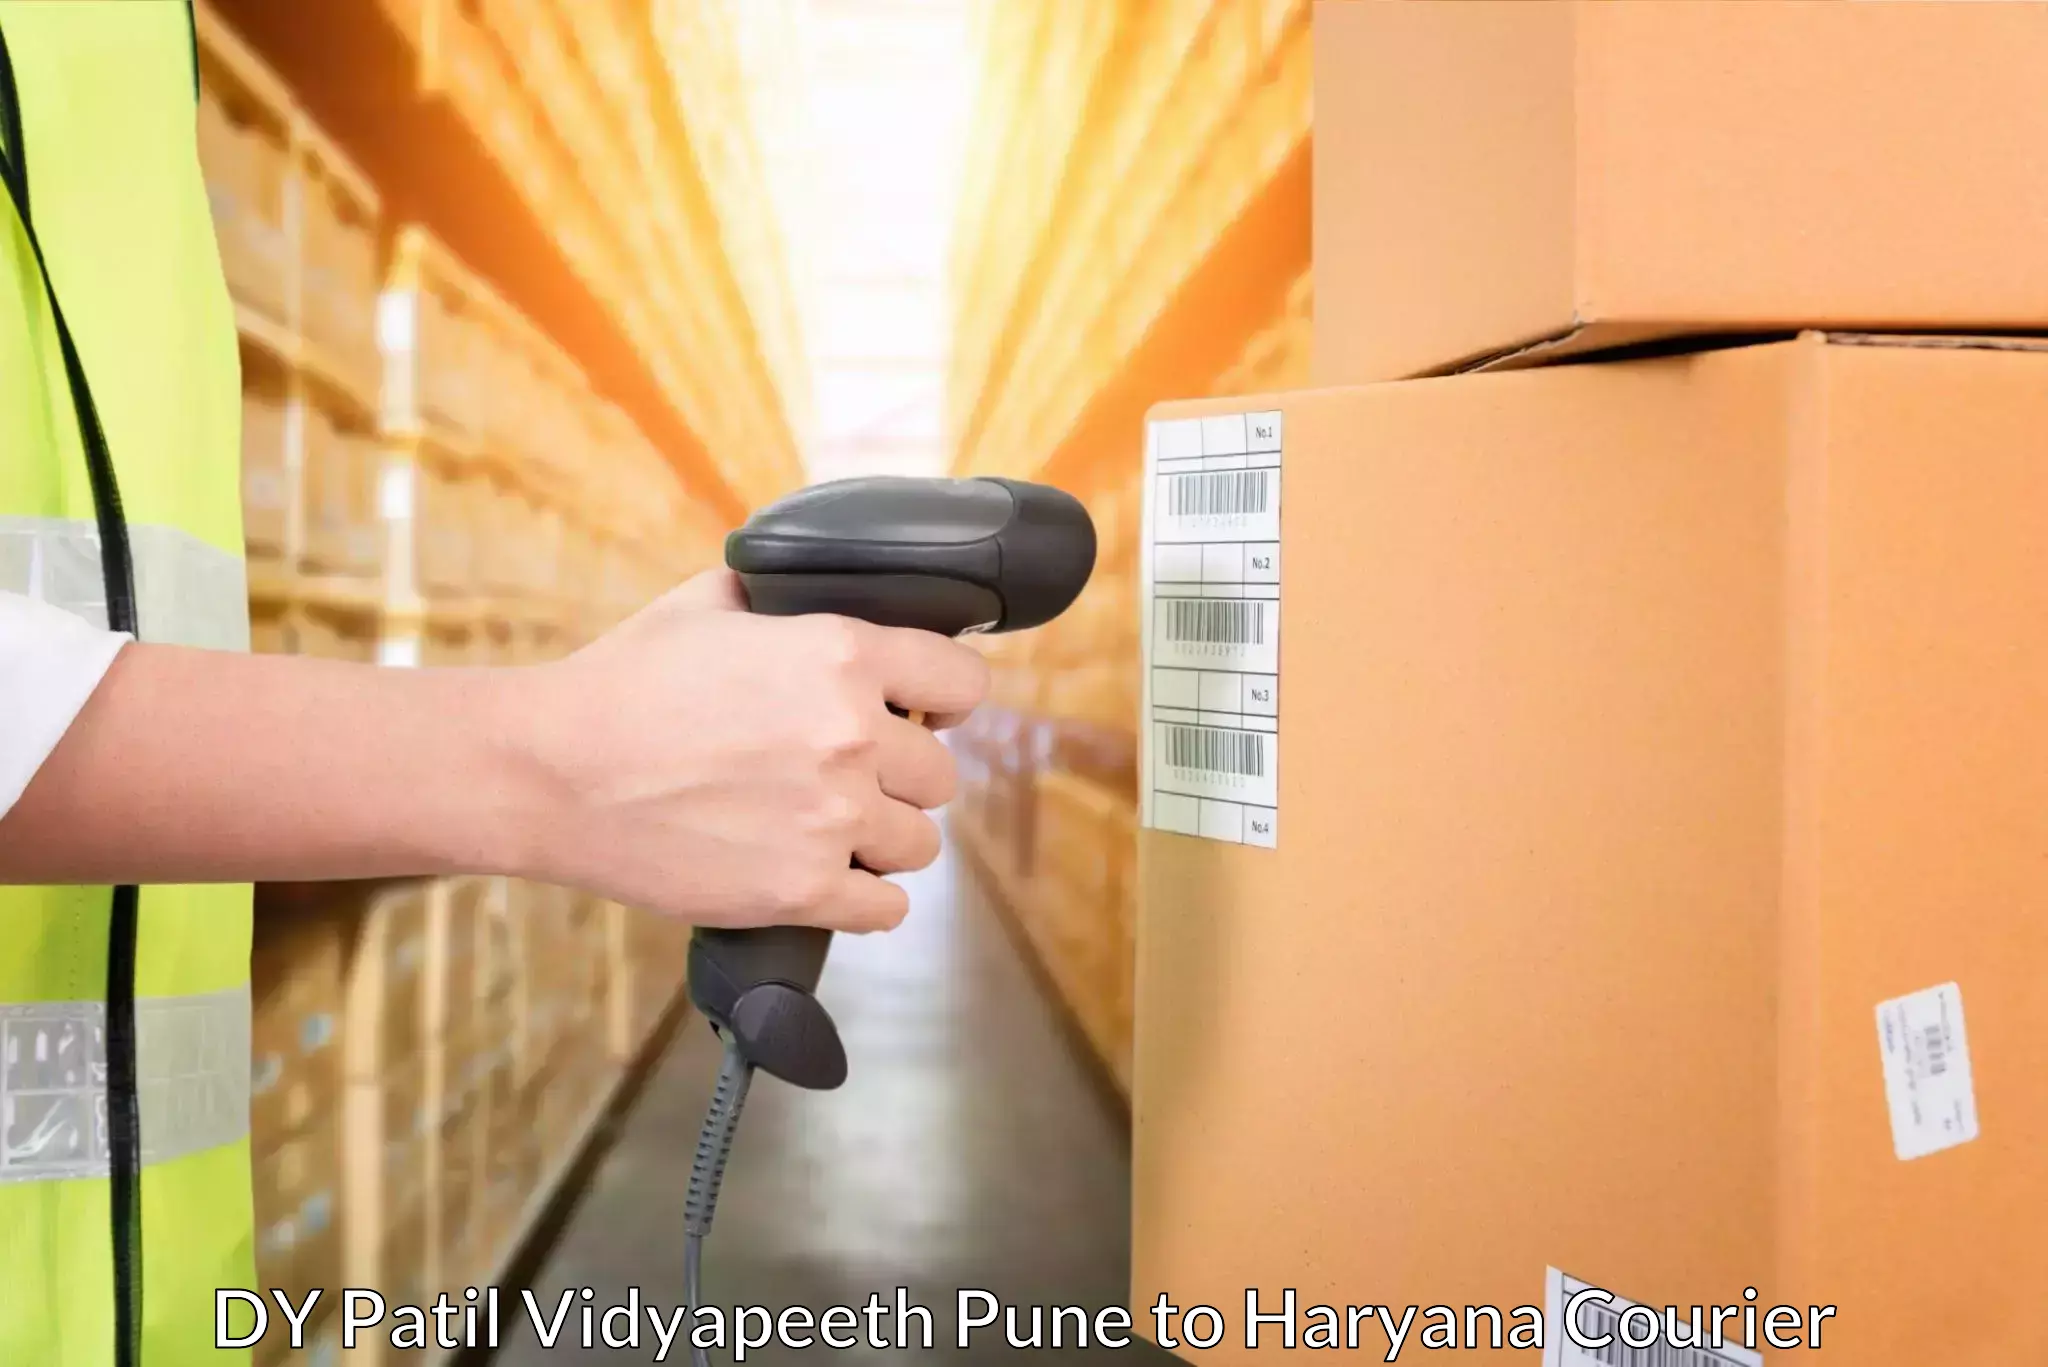 User-friendly courier app DY Patil Vidyapeeth Pune to Bahadurgarh